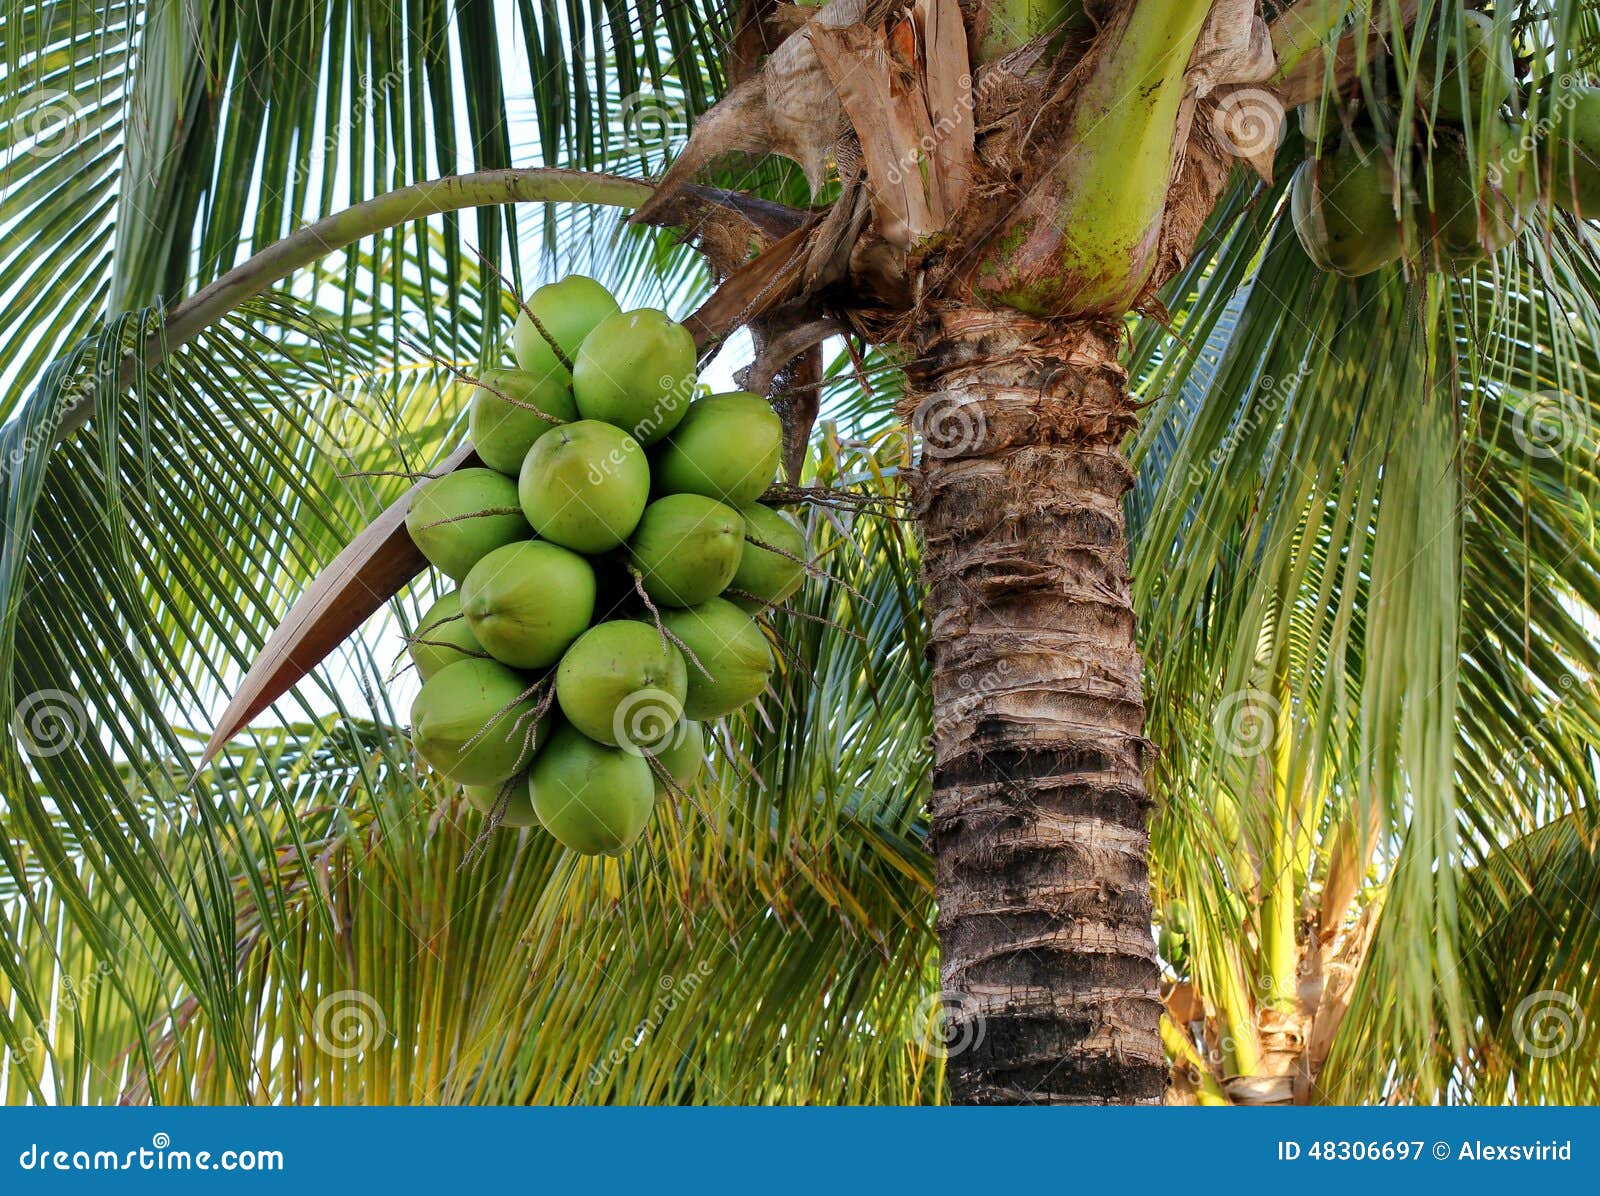 Coconuts Palm Tree Royalty-Free Stock Photography | CartoonDealer.com ...